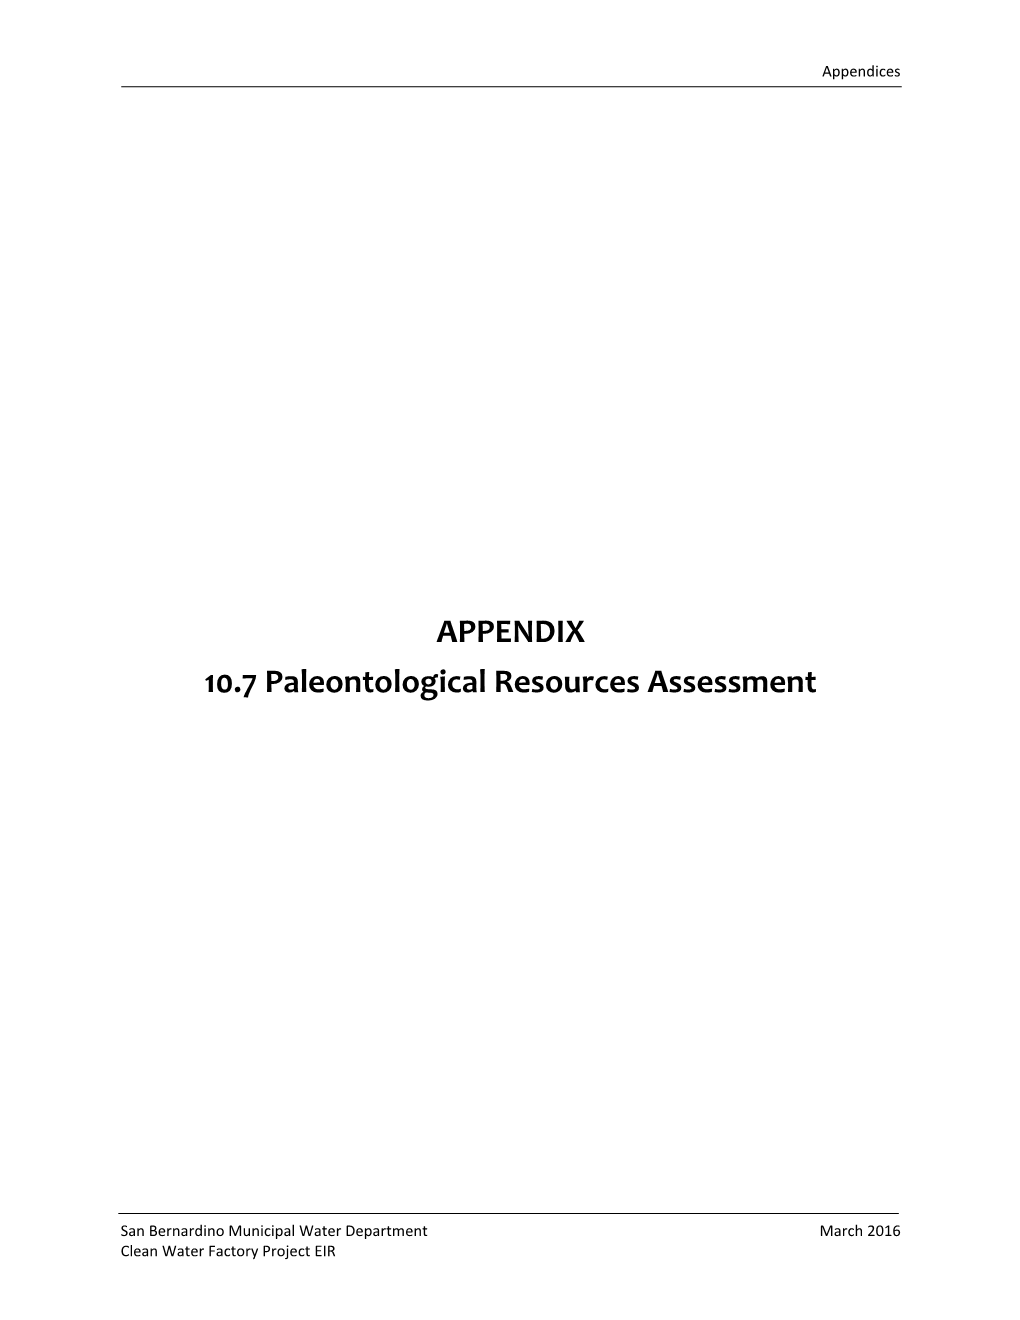 Appendix 10.7 Paleo Report (PDF)